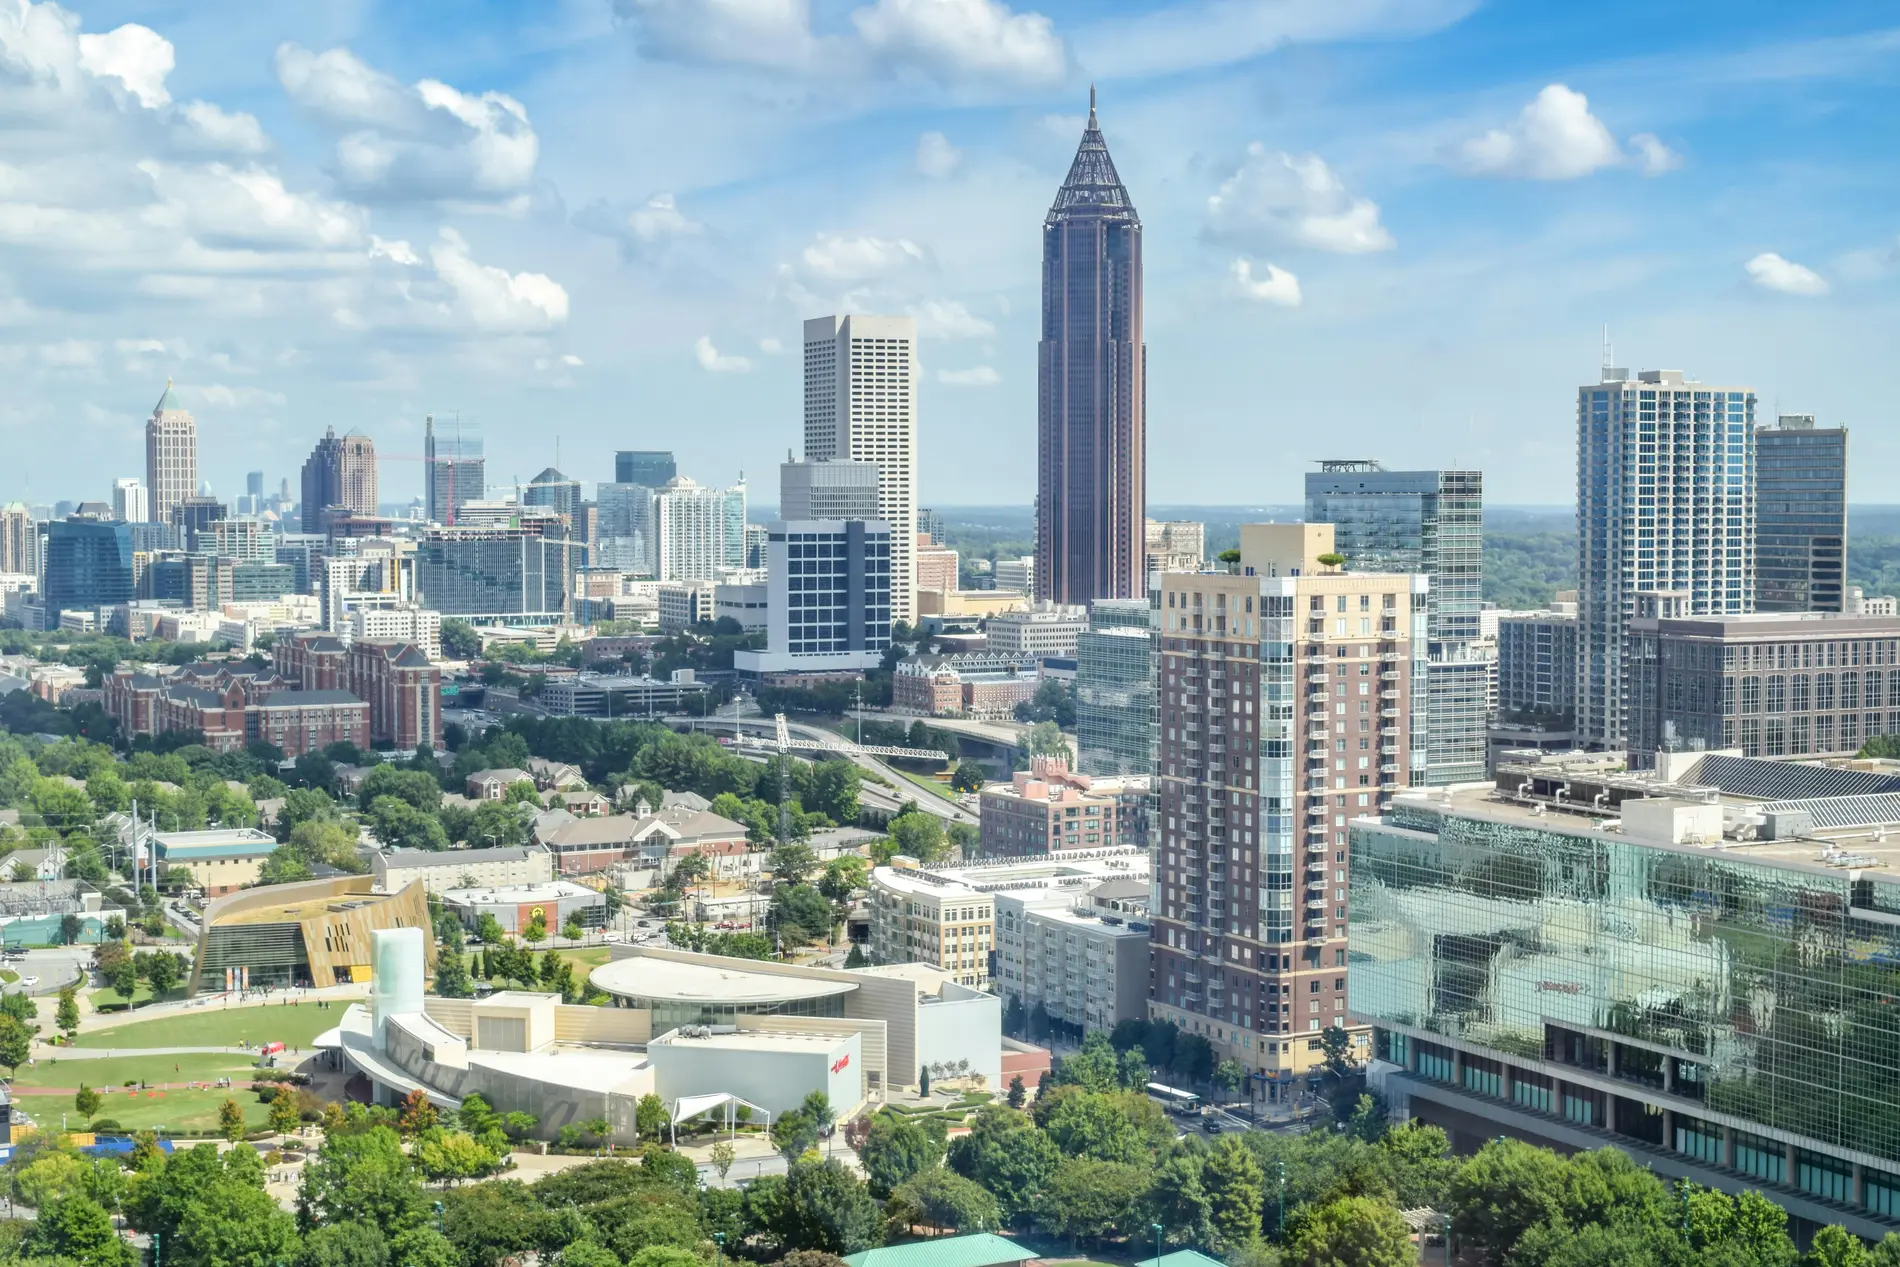 aerial view of the Atlanta skyline